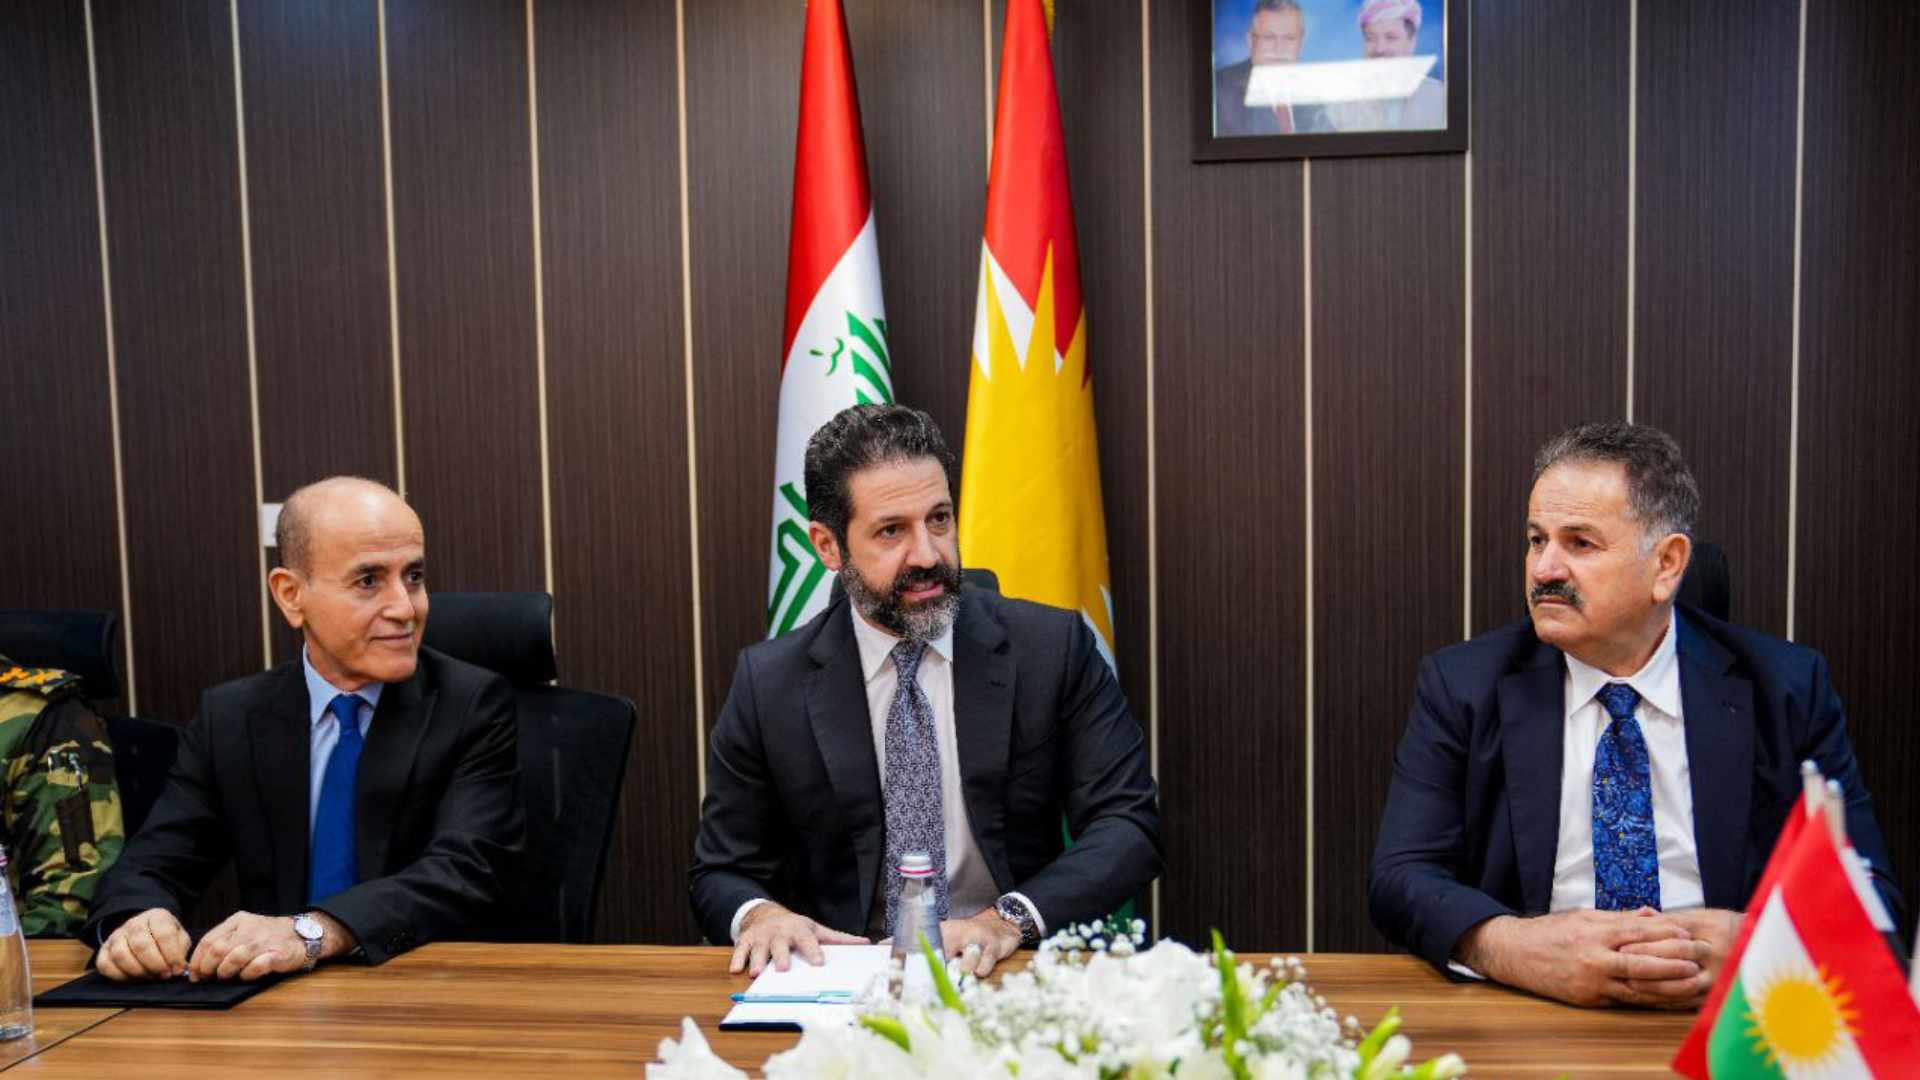  Peshmerga Minister and Deputy Prime Minister